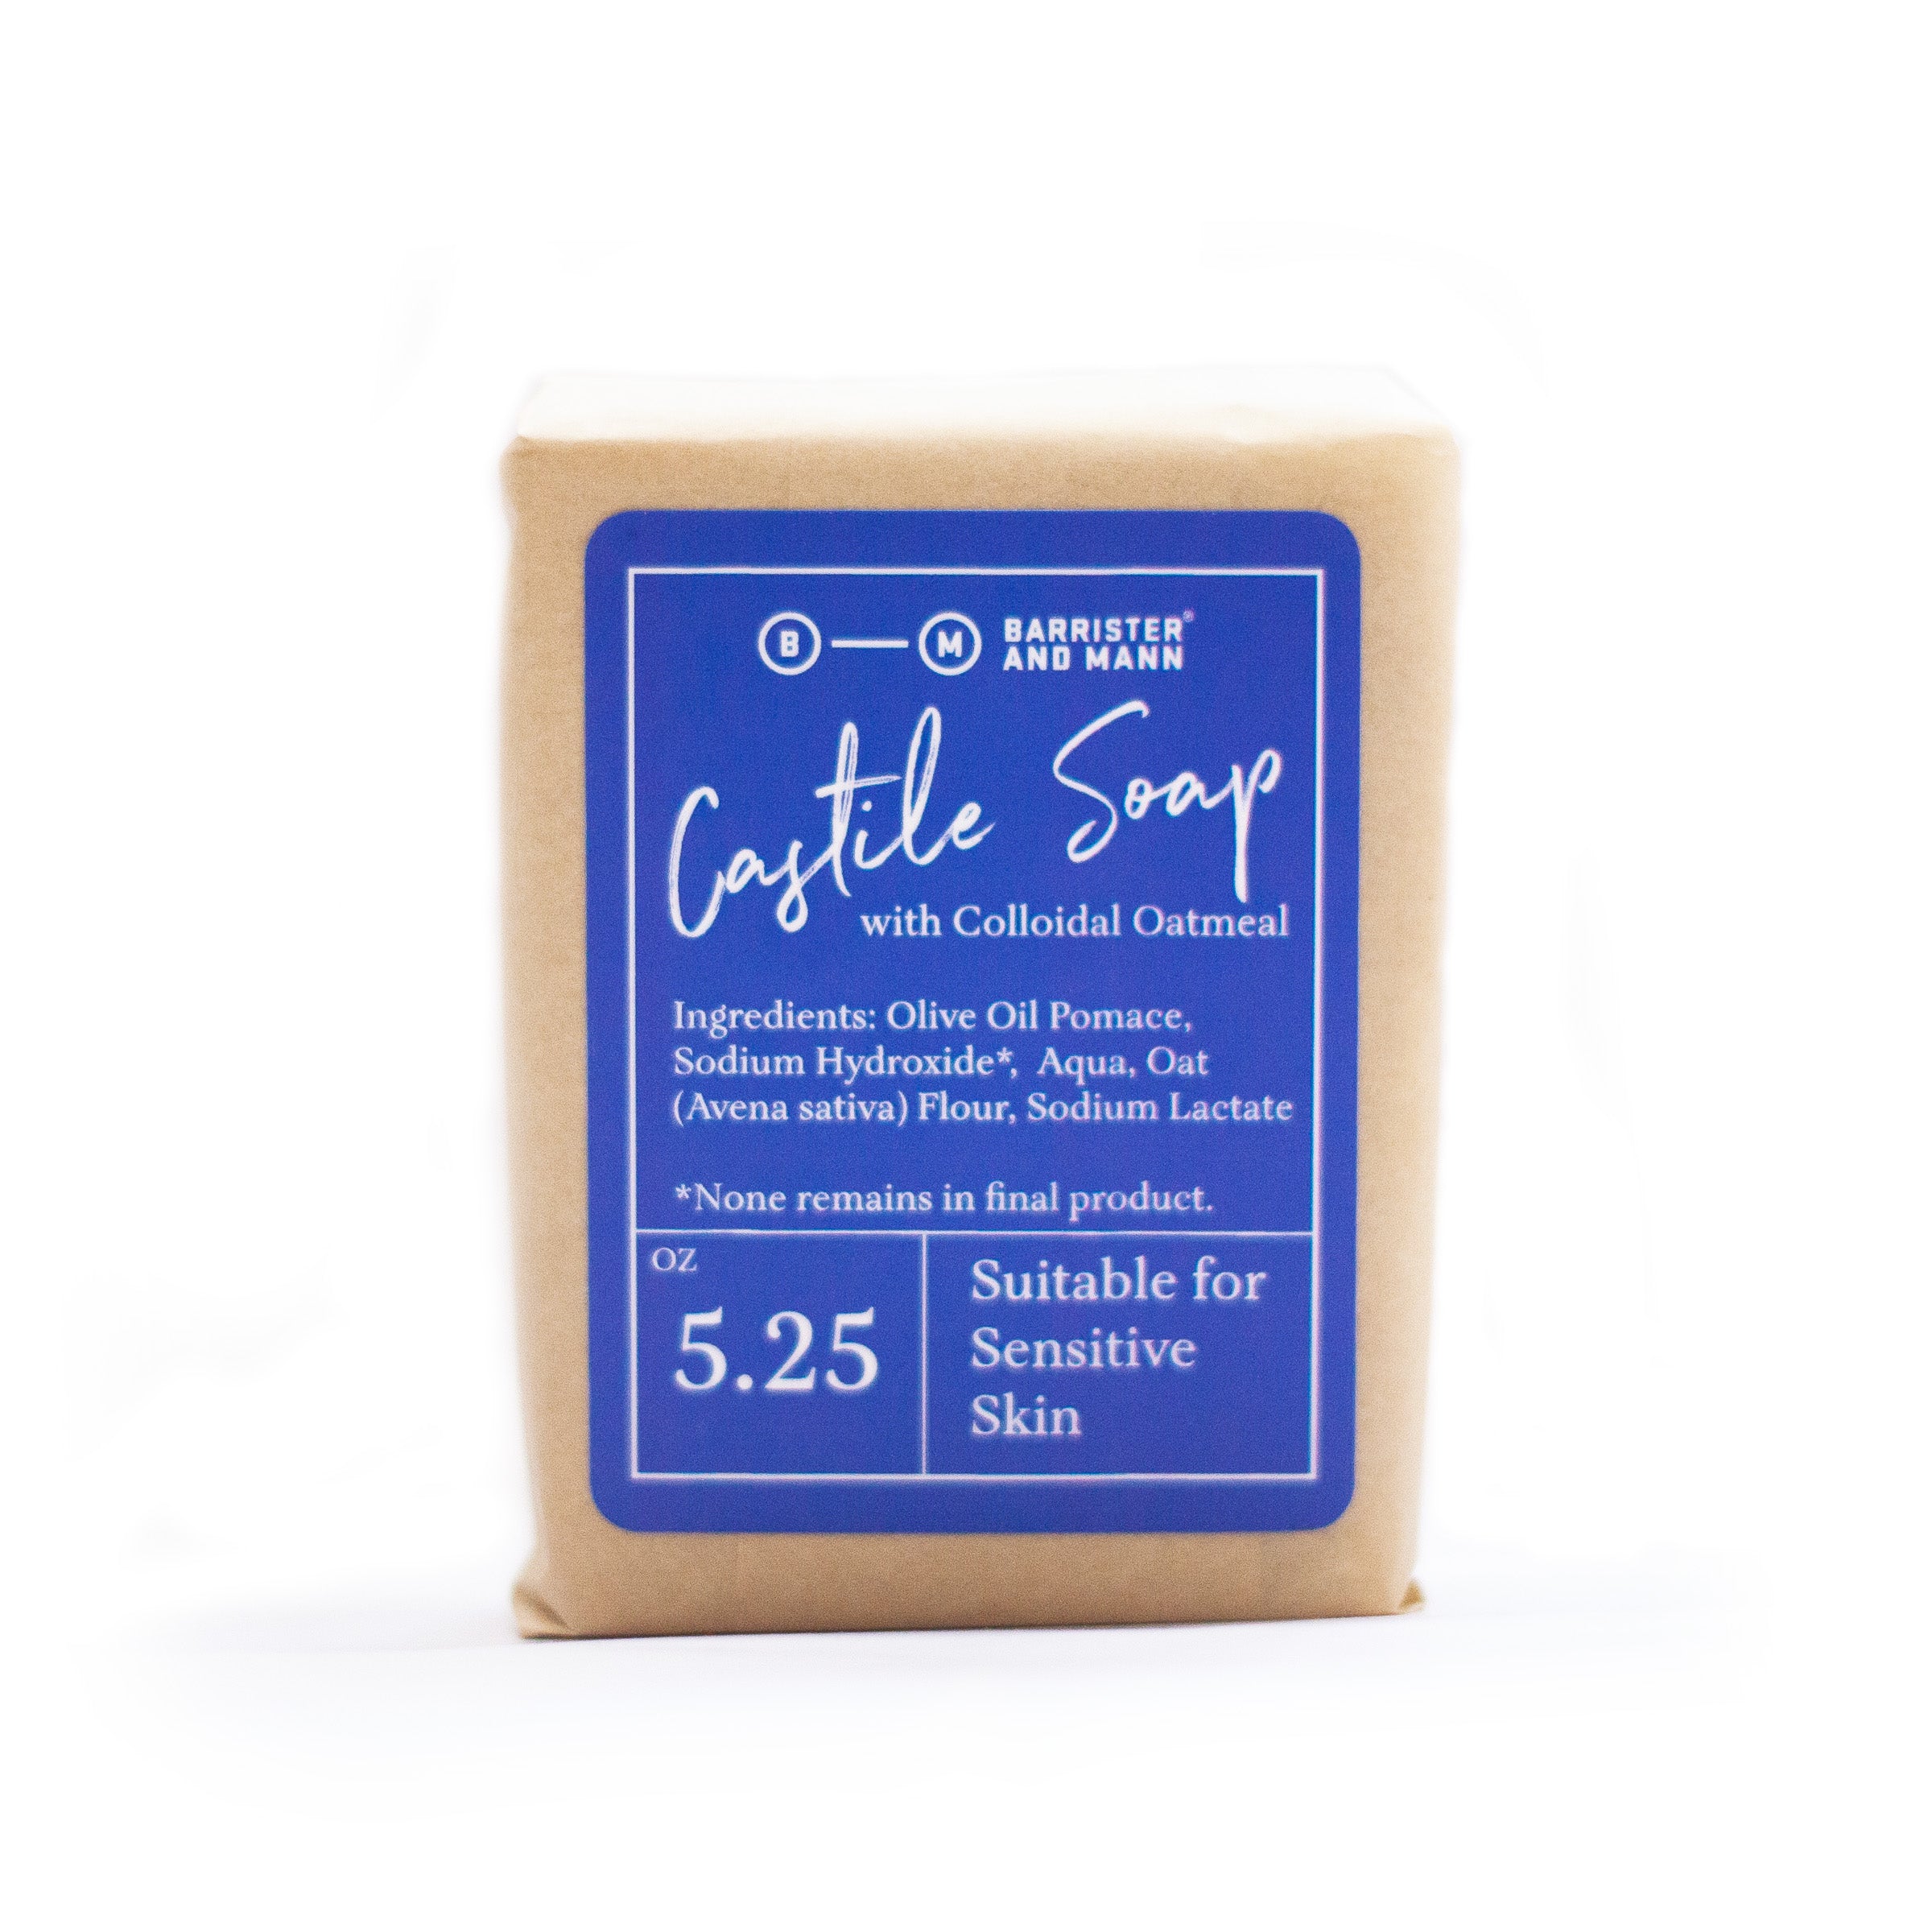 Castile Soap with Colloidal Oatmeal - Barrister and Mann LLC